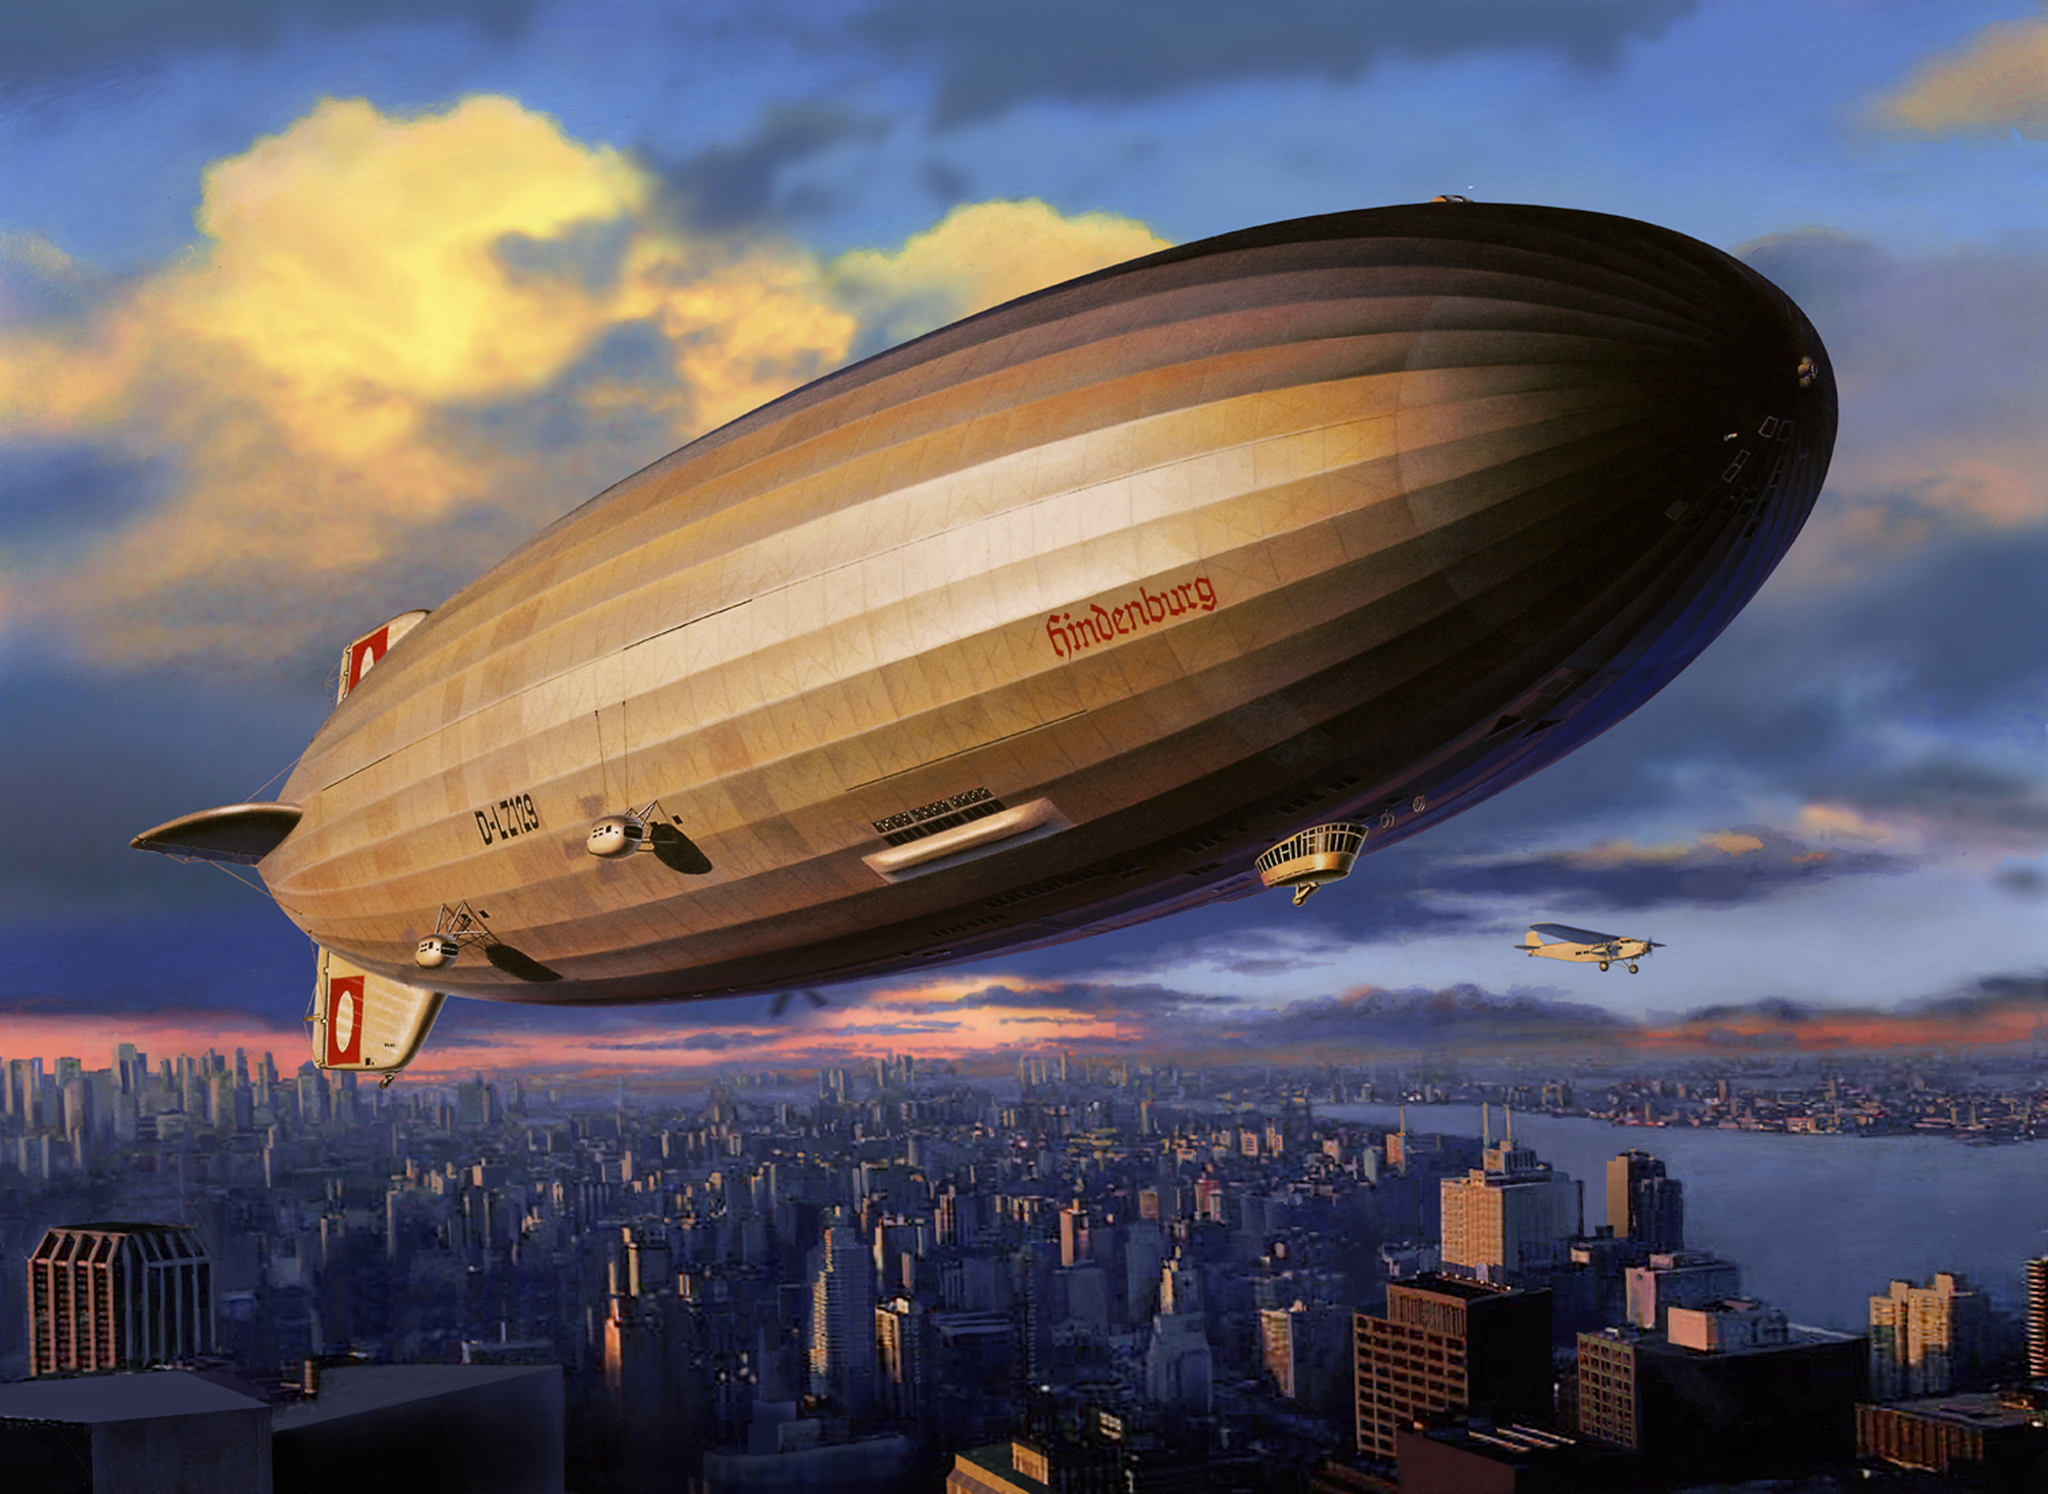 рисунок German Zeppelin LZ 129 Hindenburg